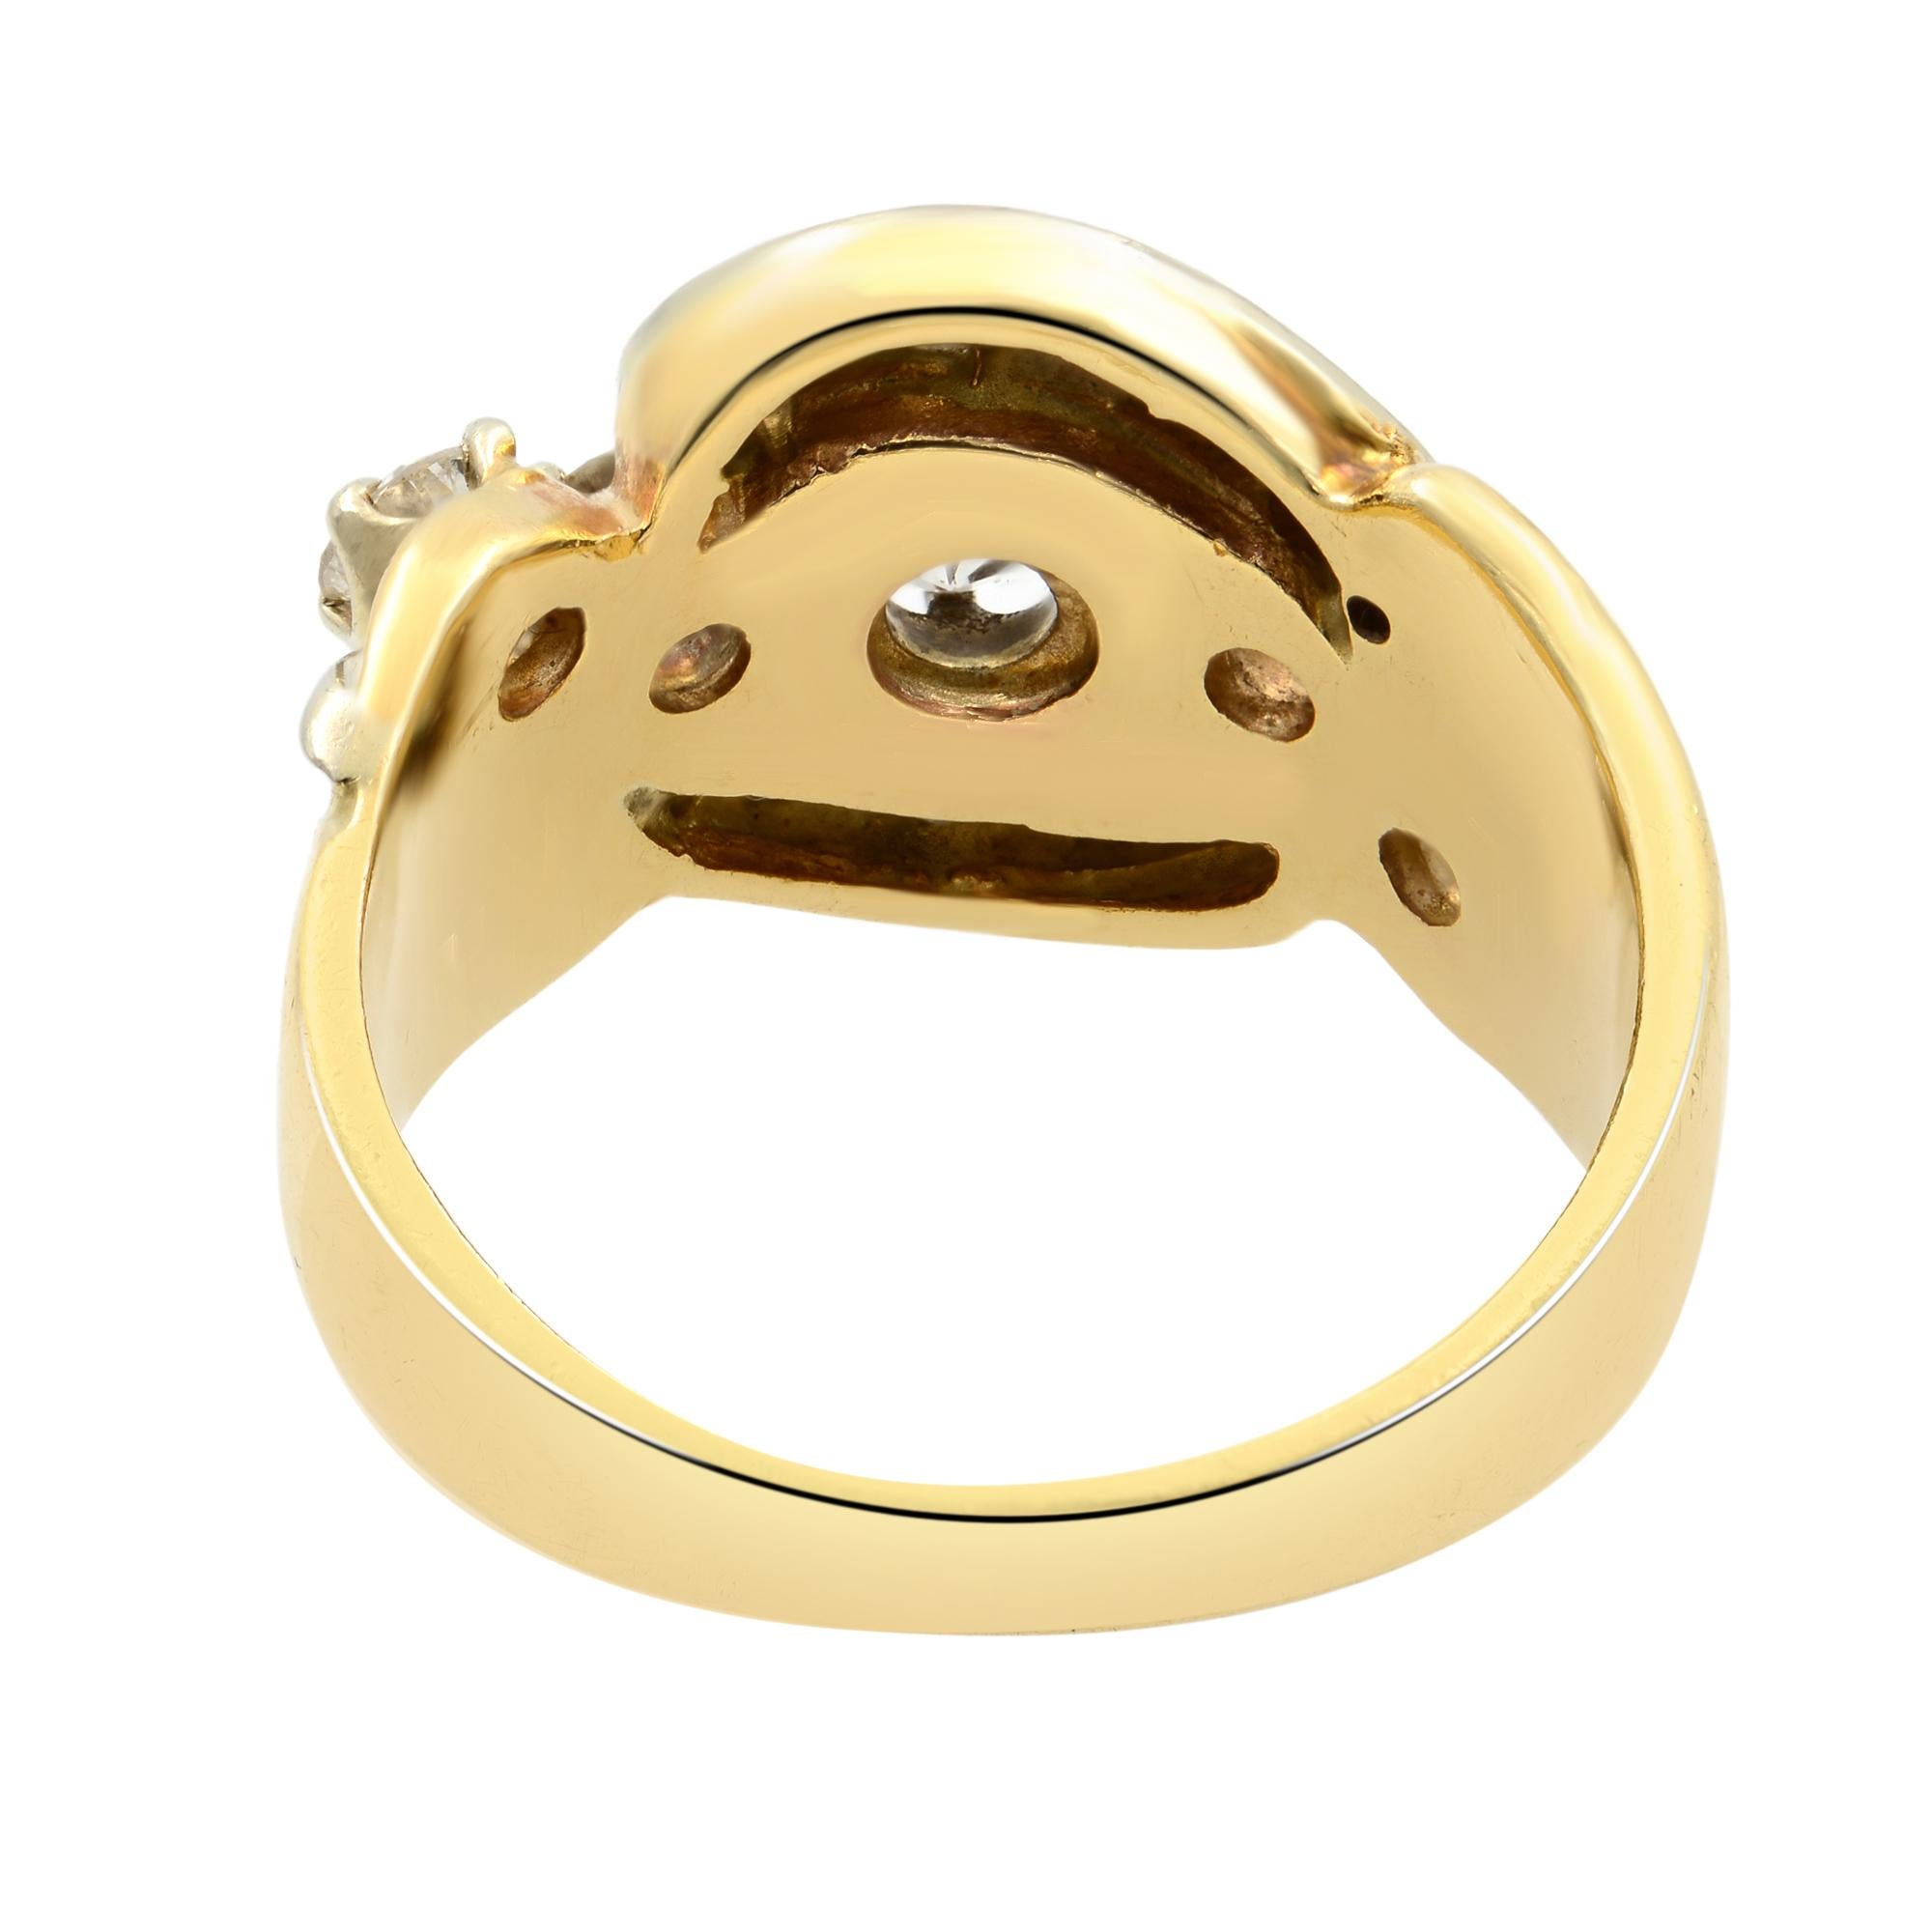 Modern Estate 2.00Cttw Round Cut Diamond Ladies Ring 14K Yellow Gold For Sale